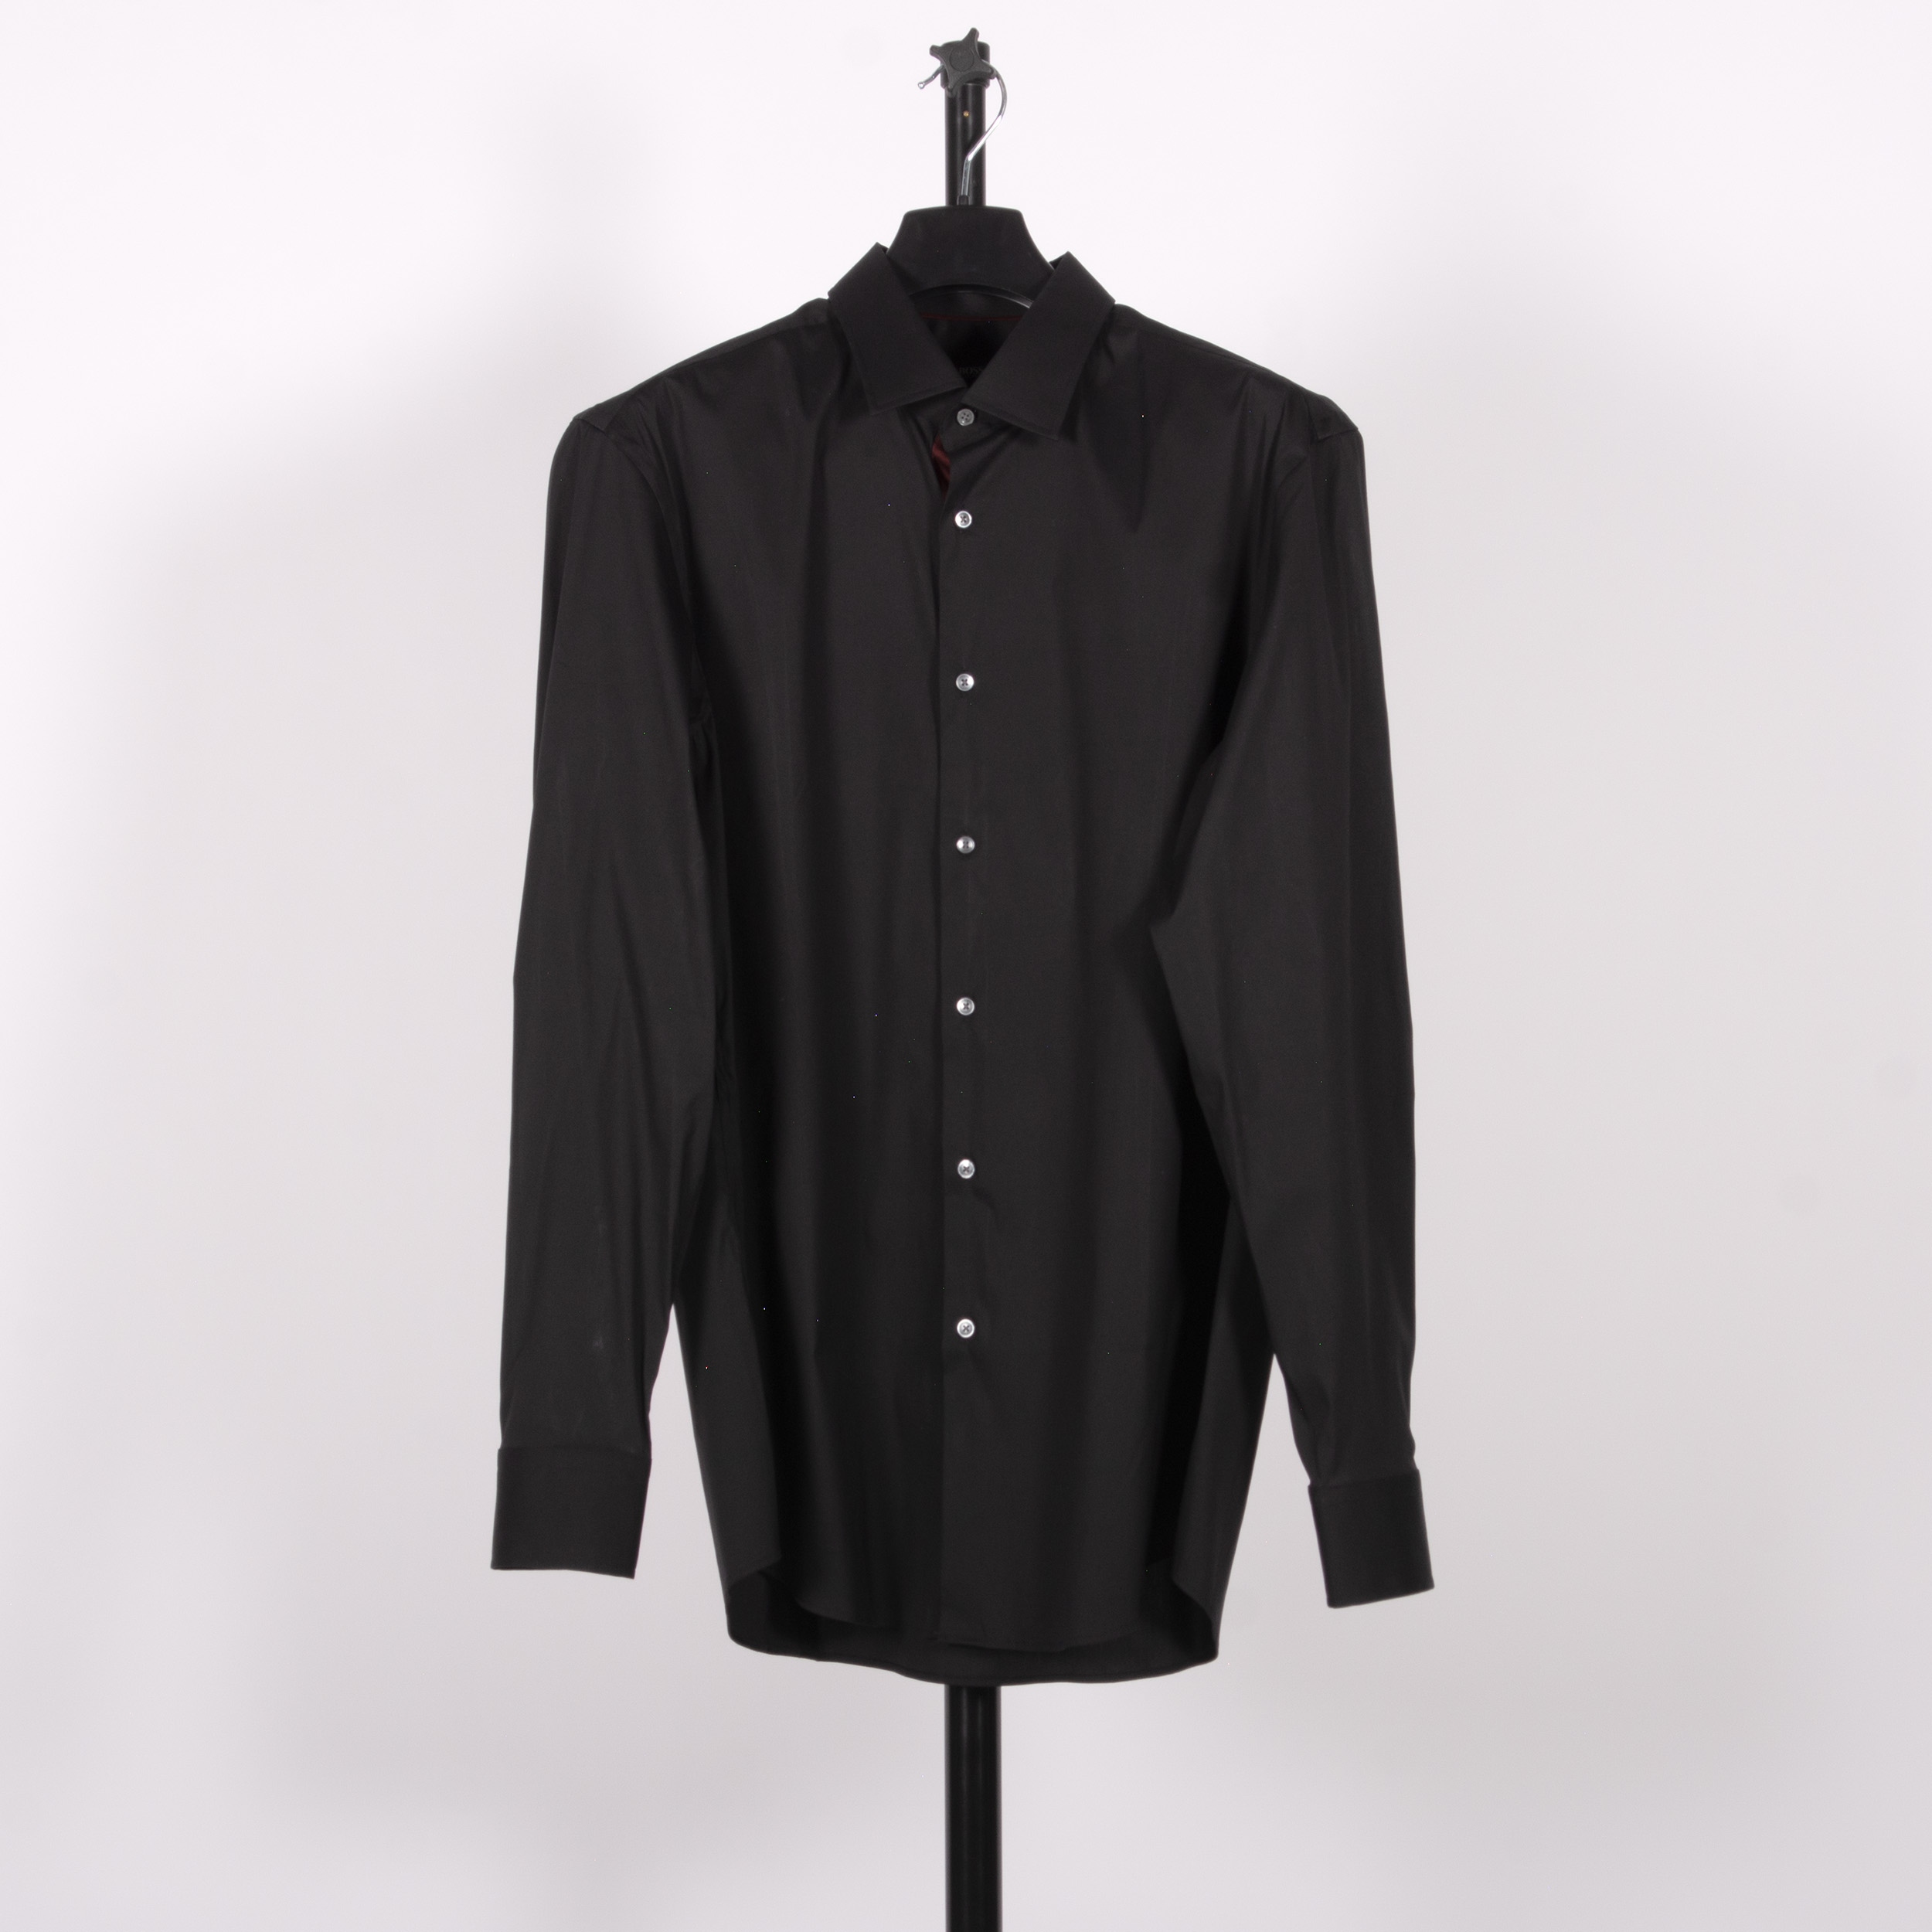 HUGO BOSS  Jonty Travel Formal Shirt Black